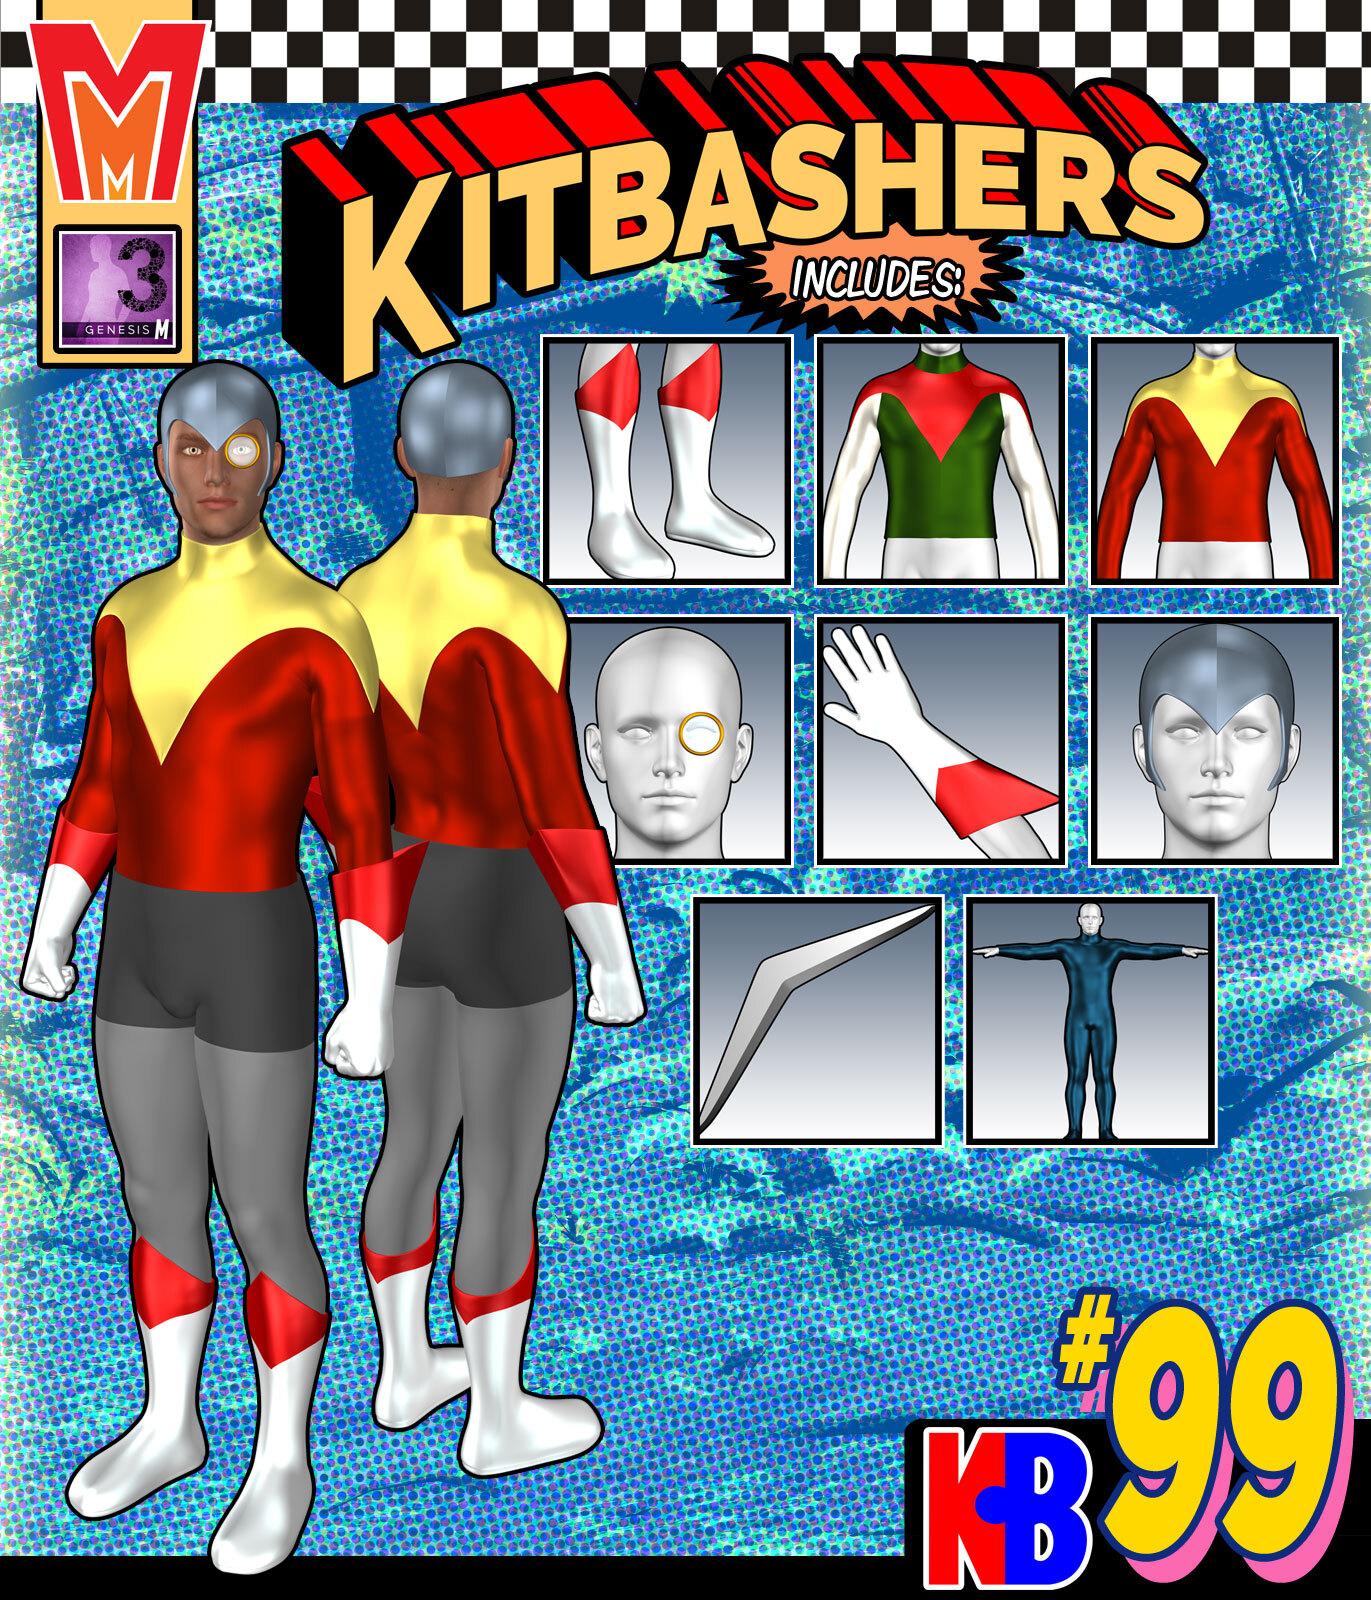 Kitbashers 099 MMG3M by: MightyMite, 3D Models by Daz 3D